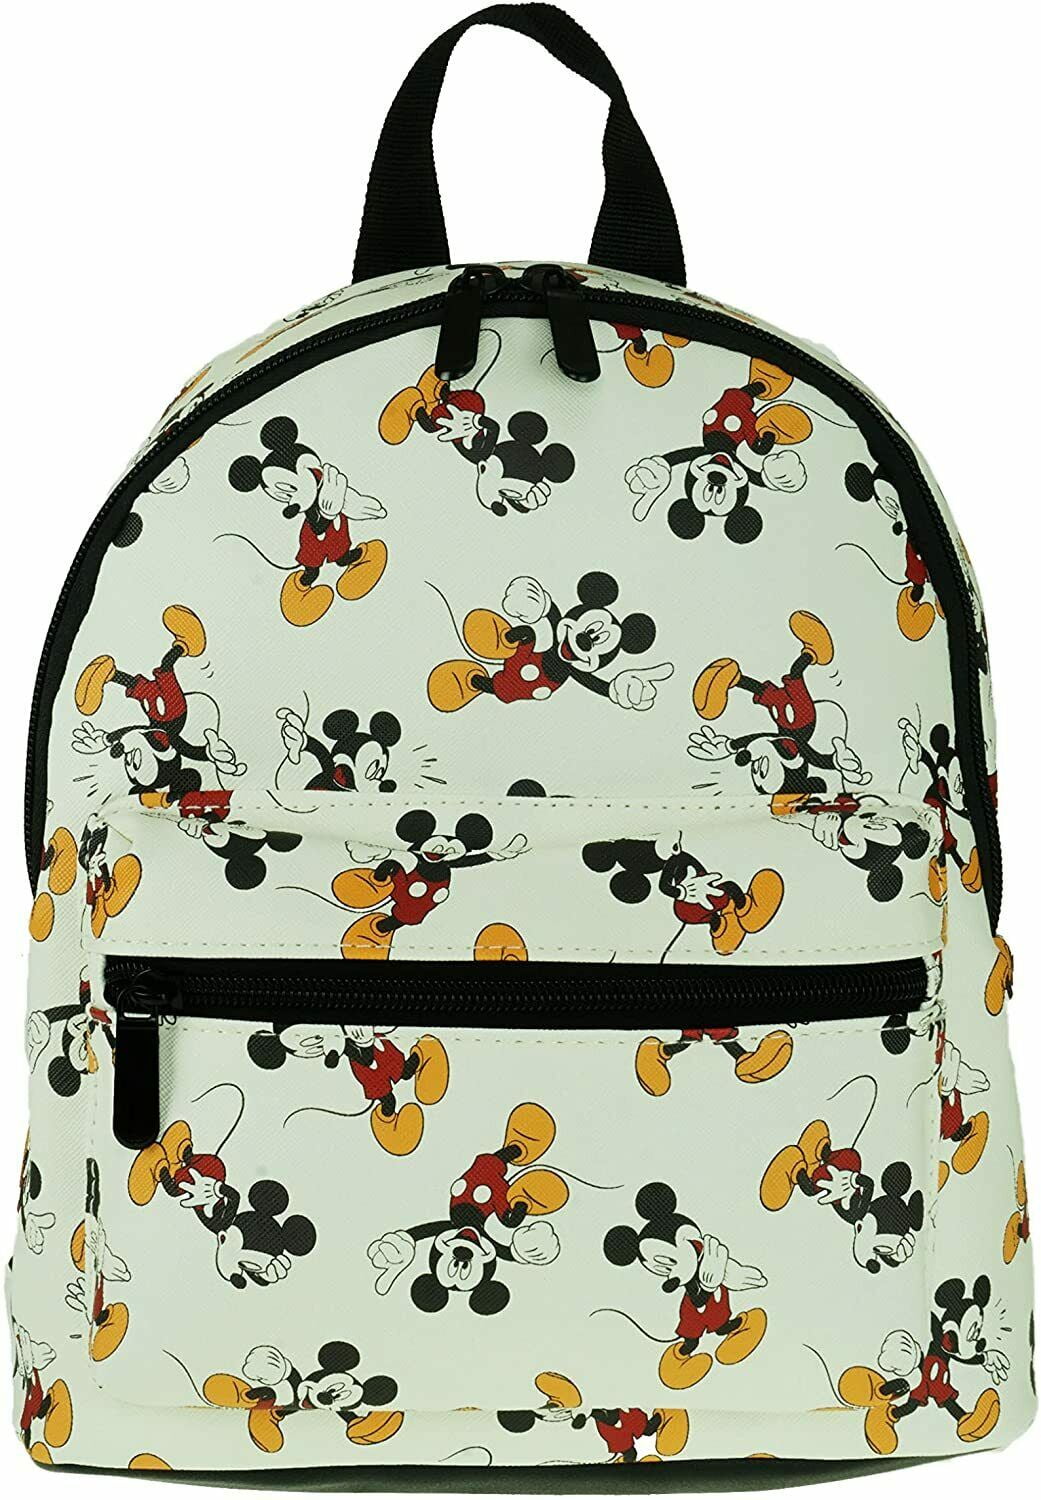 Women's Small Mickey Mouse denim bag I